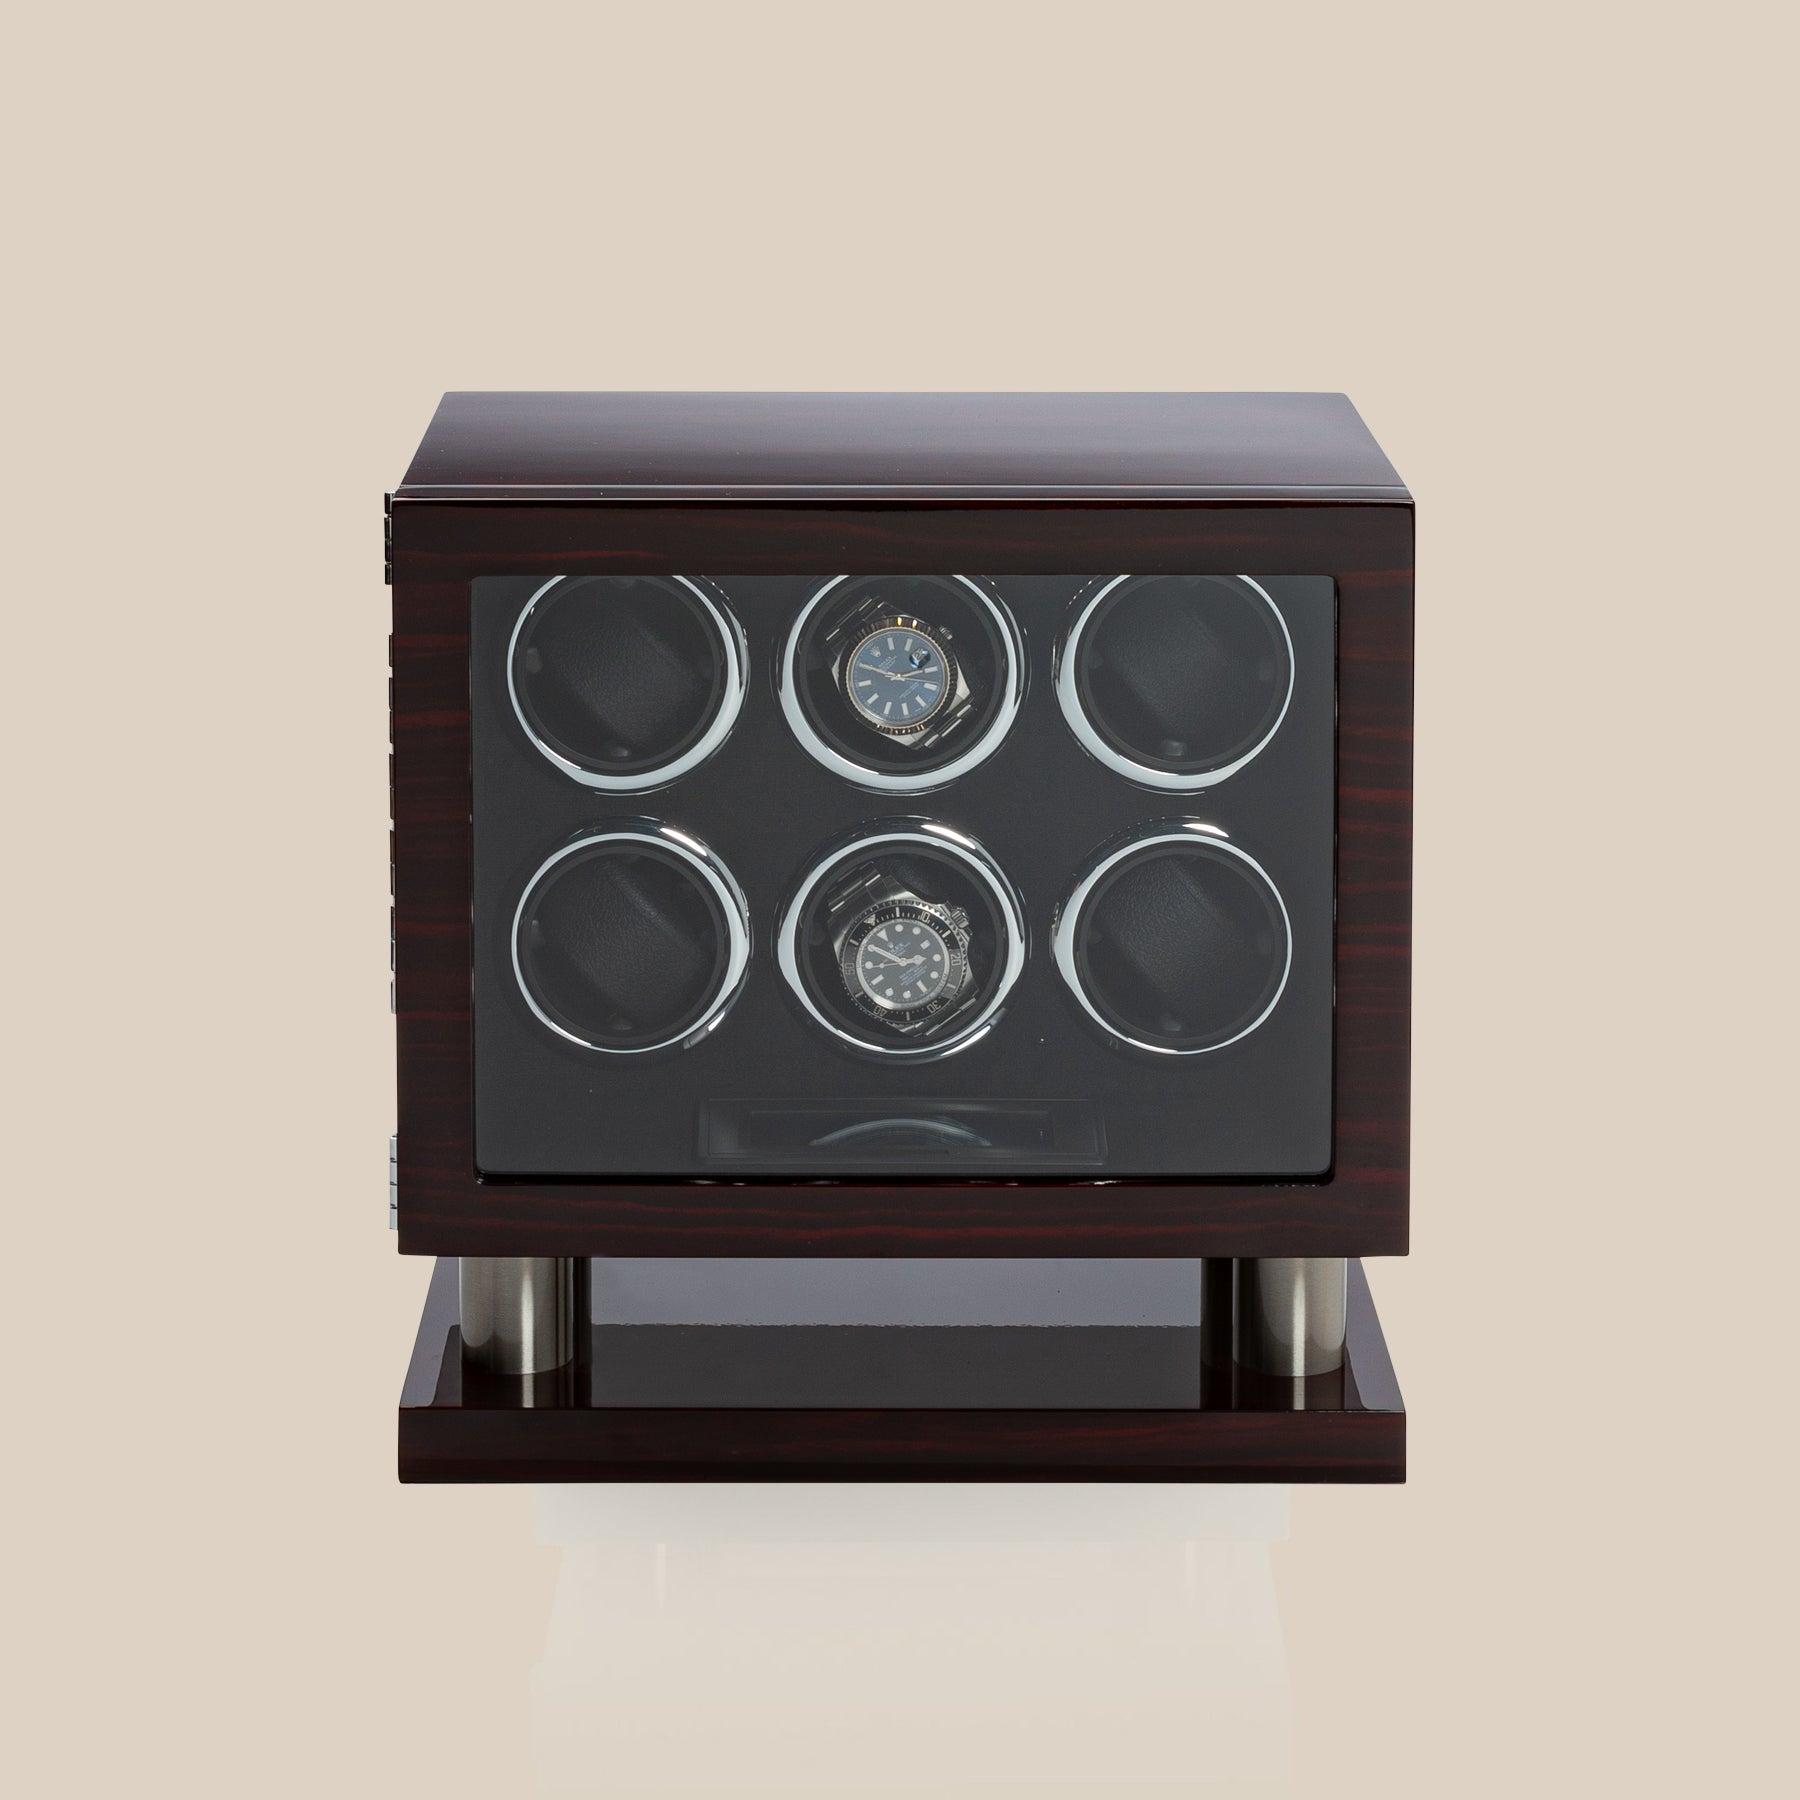 WW529 Vitrina móvil (marrón/negro) - 6 relojes